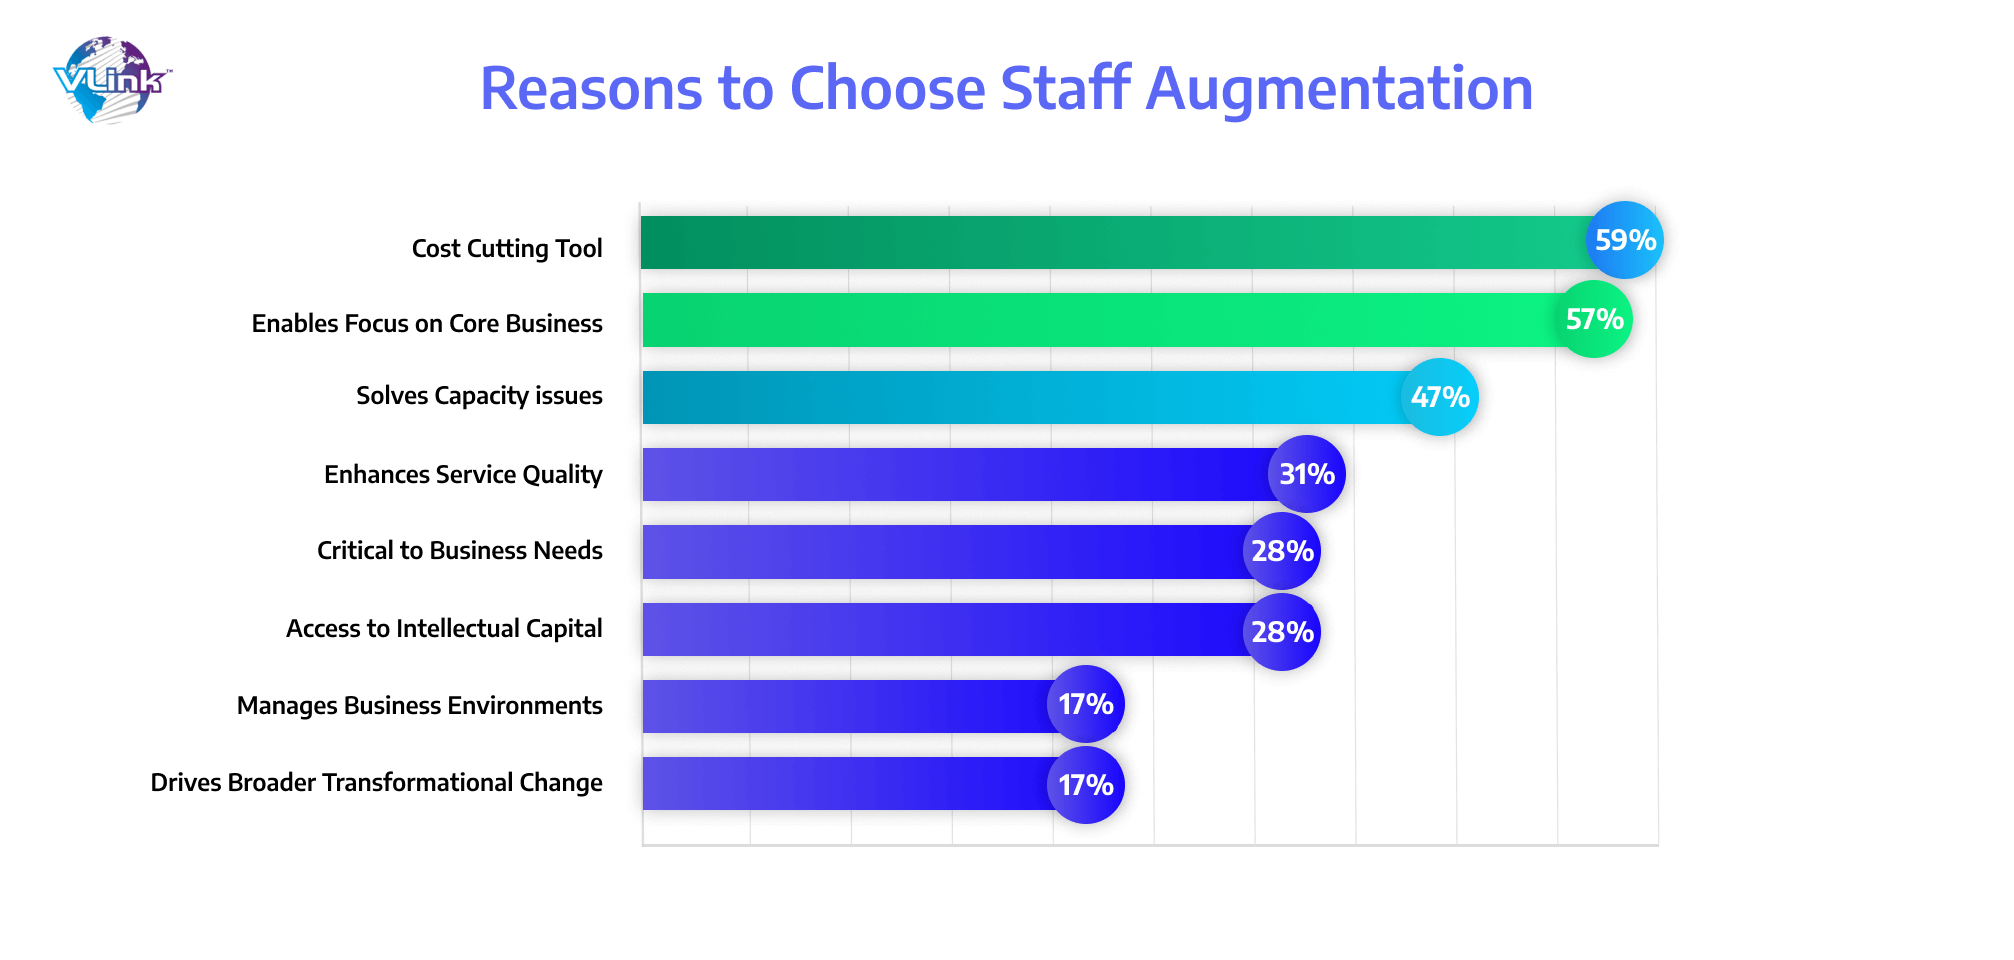 Reasons to choose staff augmentation